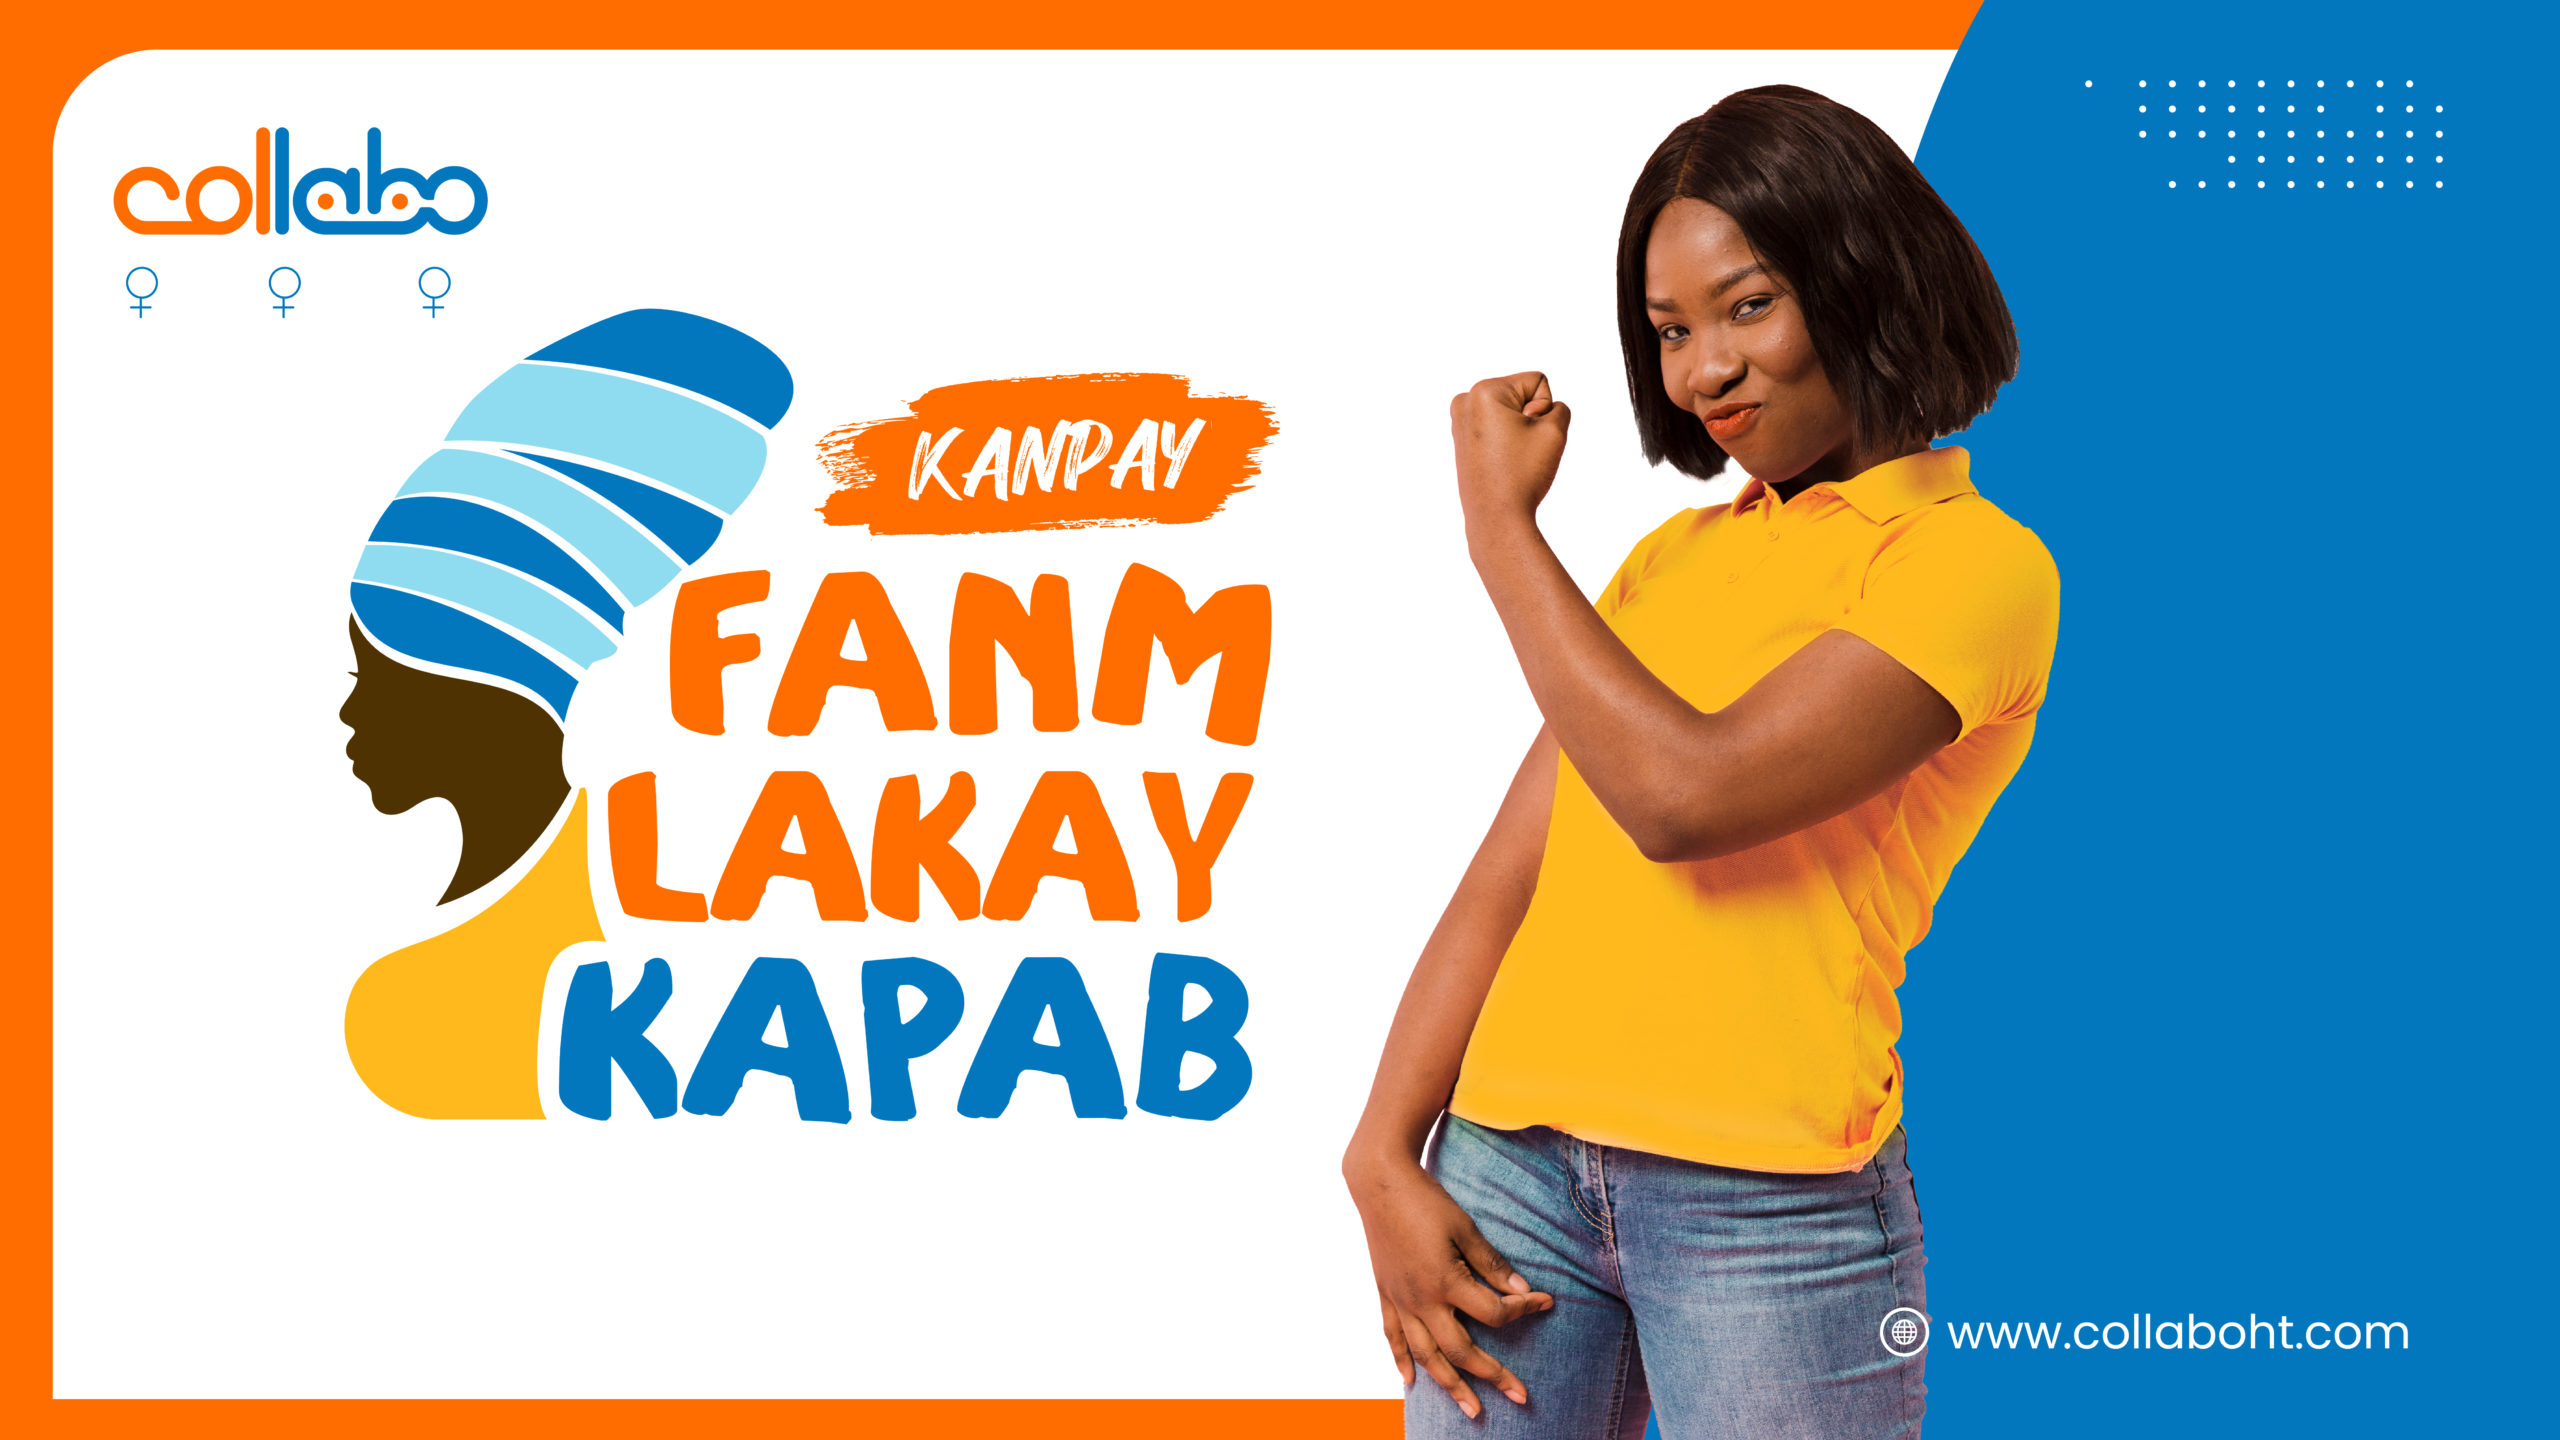 «Fanm lakay kapab», une campagne lancée pour valoriser l'entrepreunariat féminin